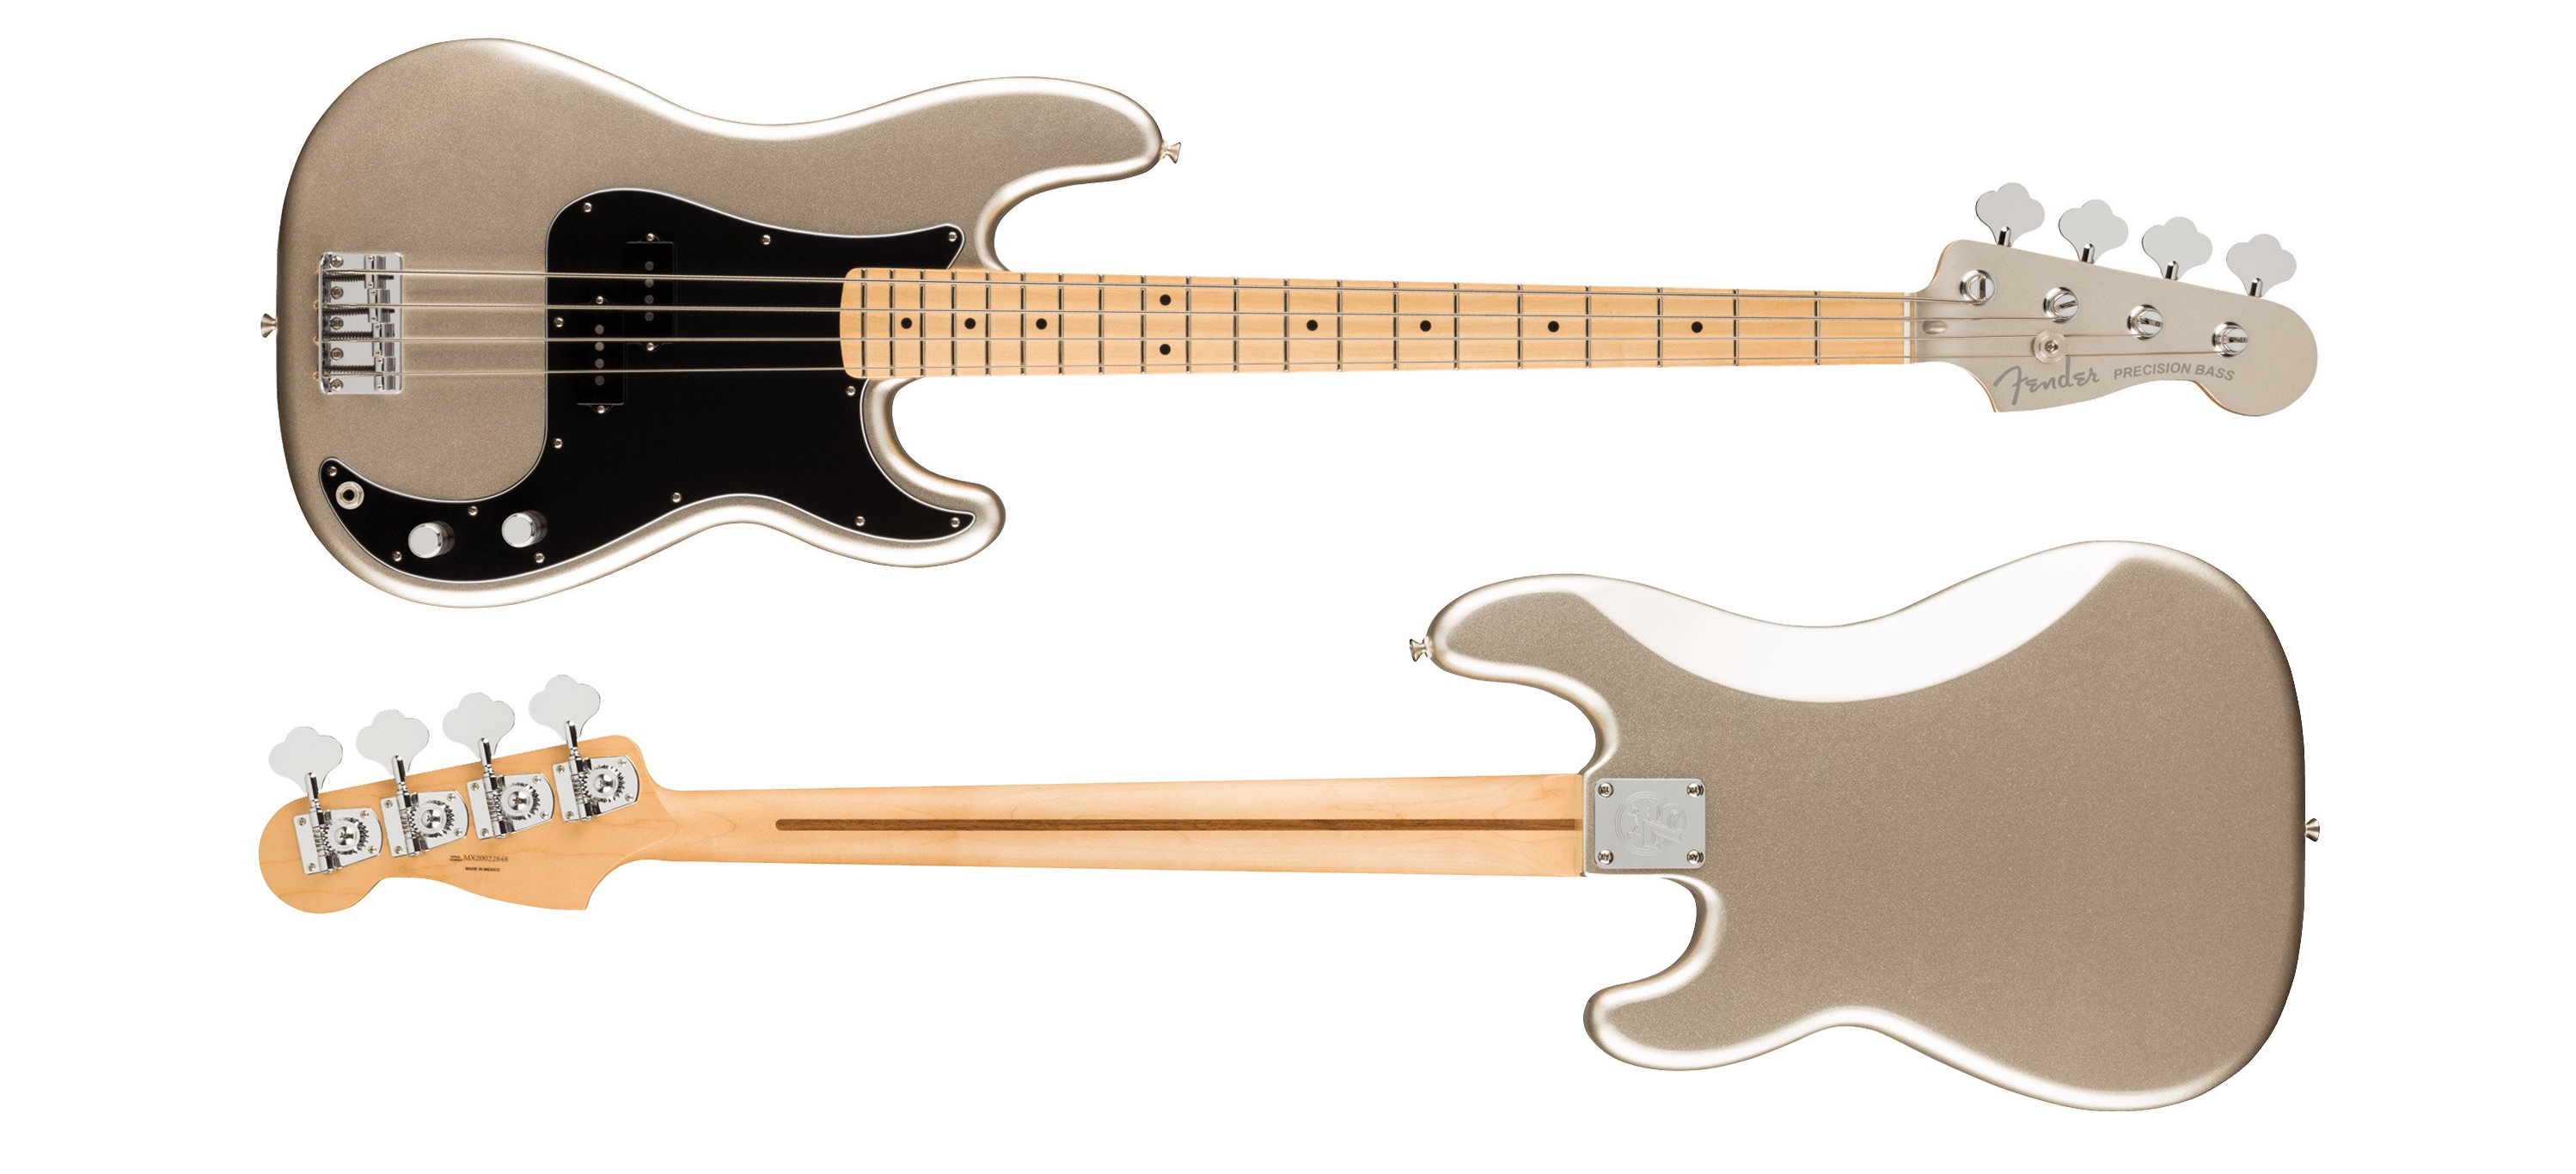 Fender 75th anniversary precision bass